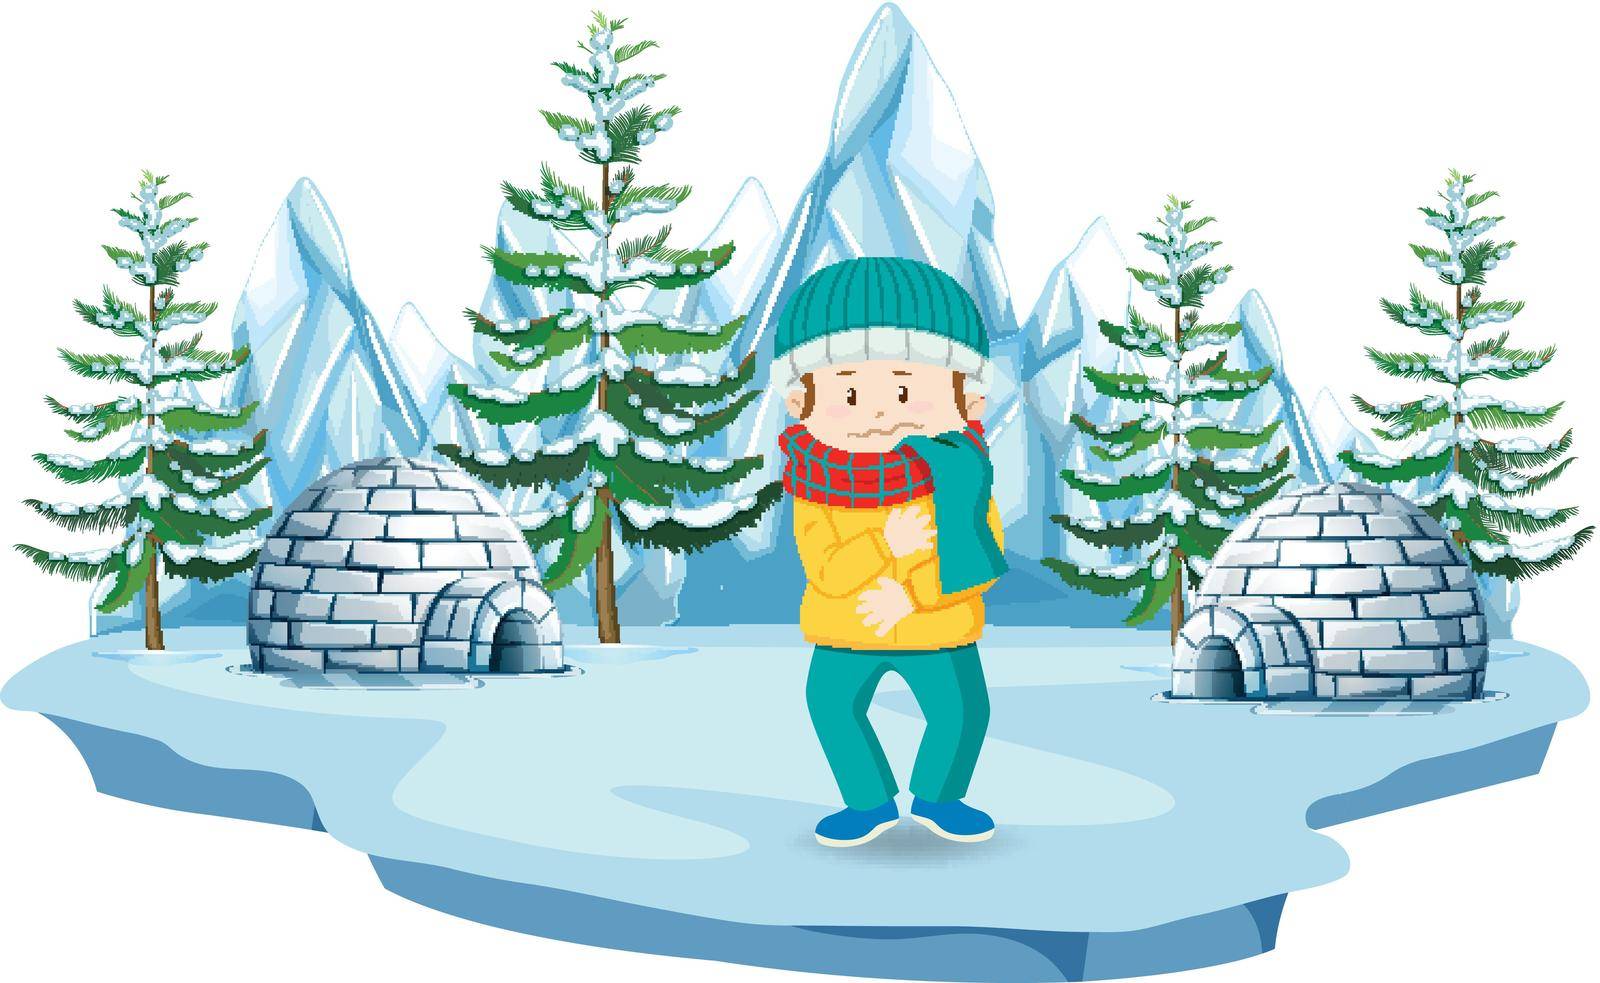 A Boy at North Pole illustration